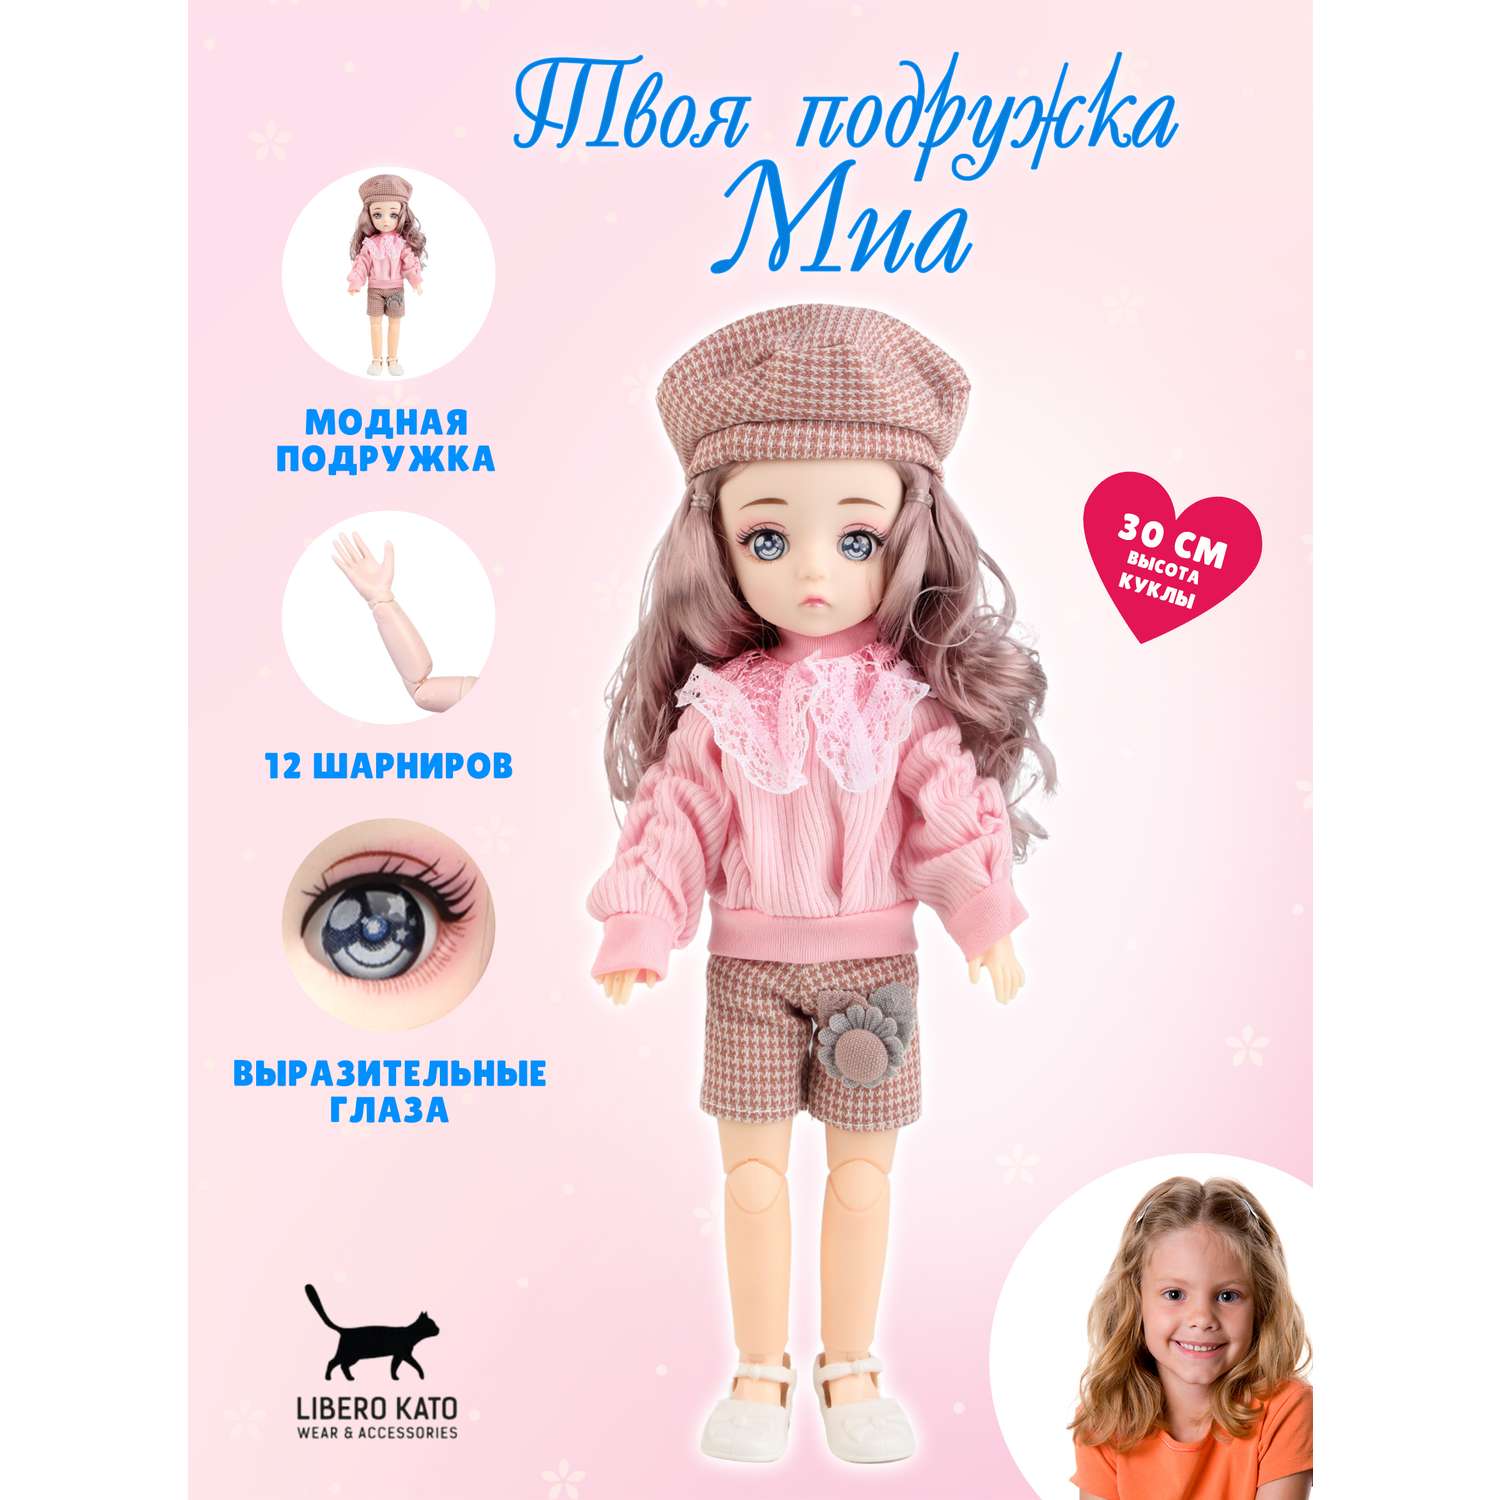 Кукла шарнирная 30 см LIBERO KATO подружка Миа LKk-3 - фото 2